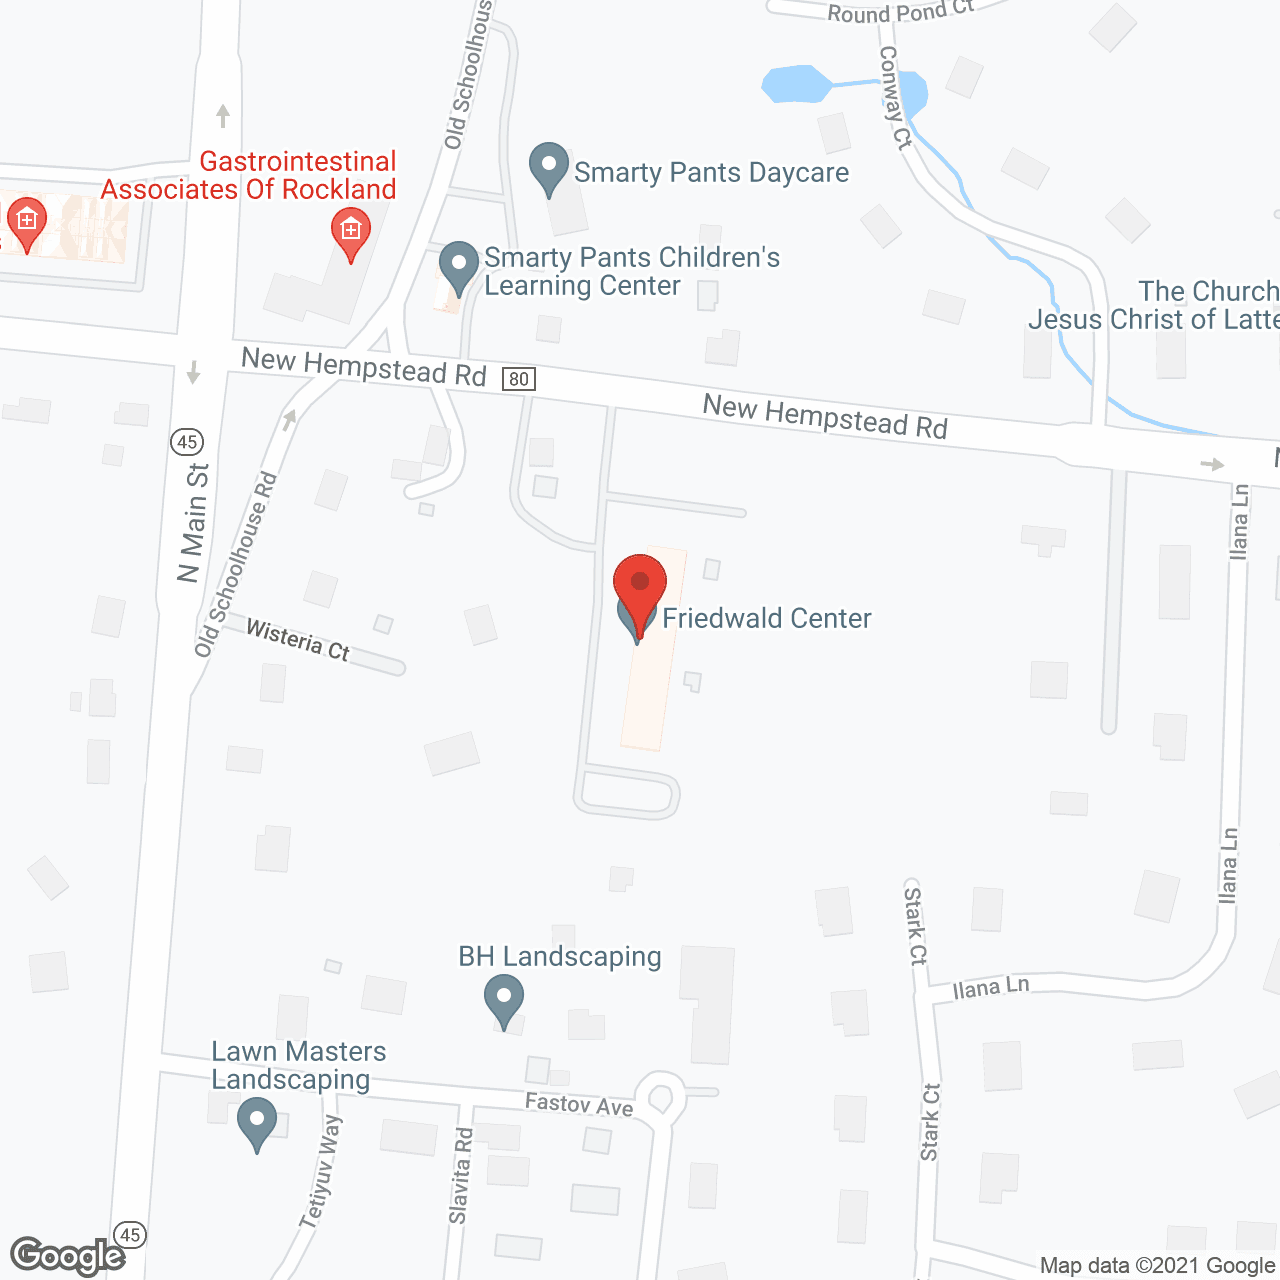 Friedwald Center for Rehabilitation and Nursing in google map